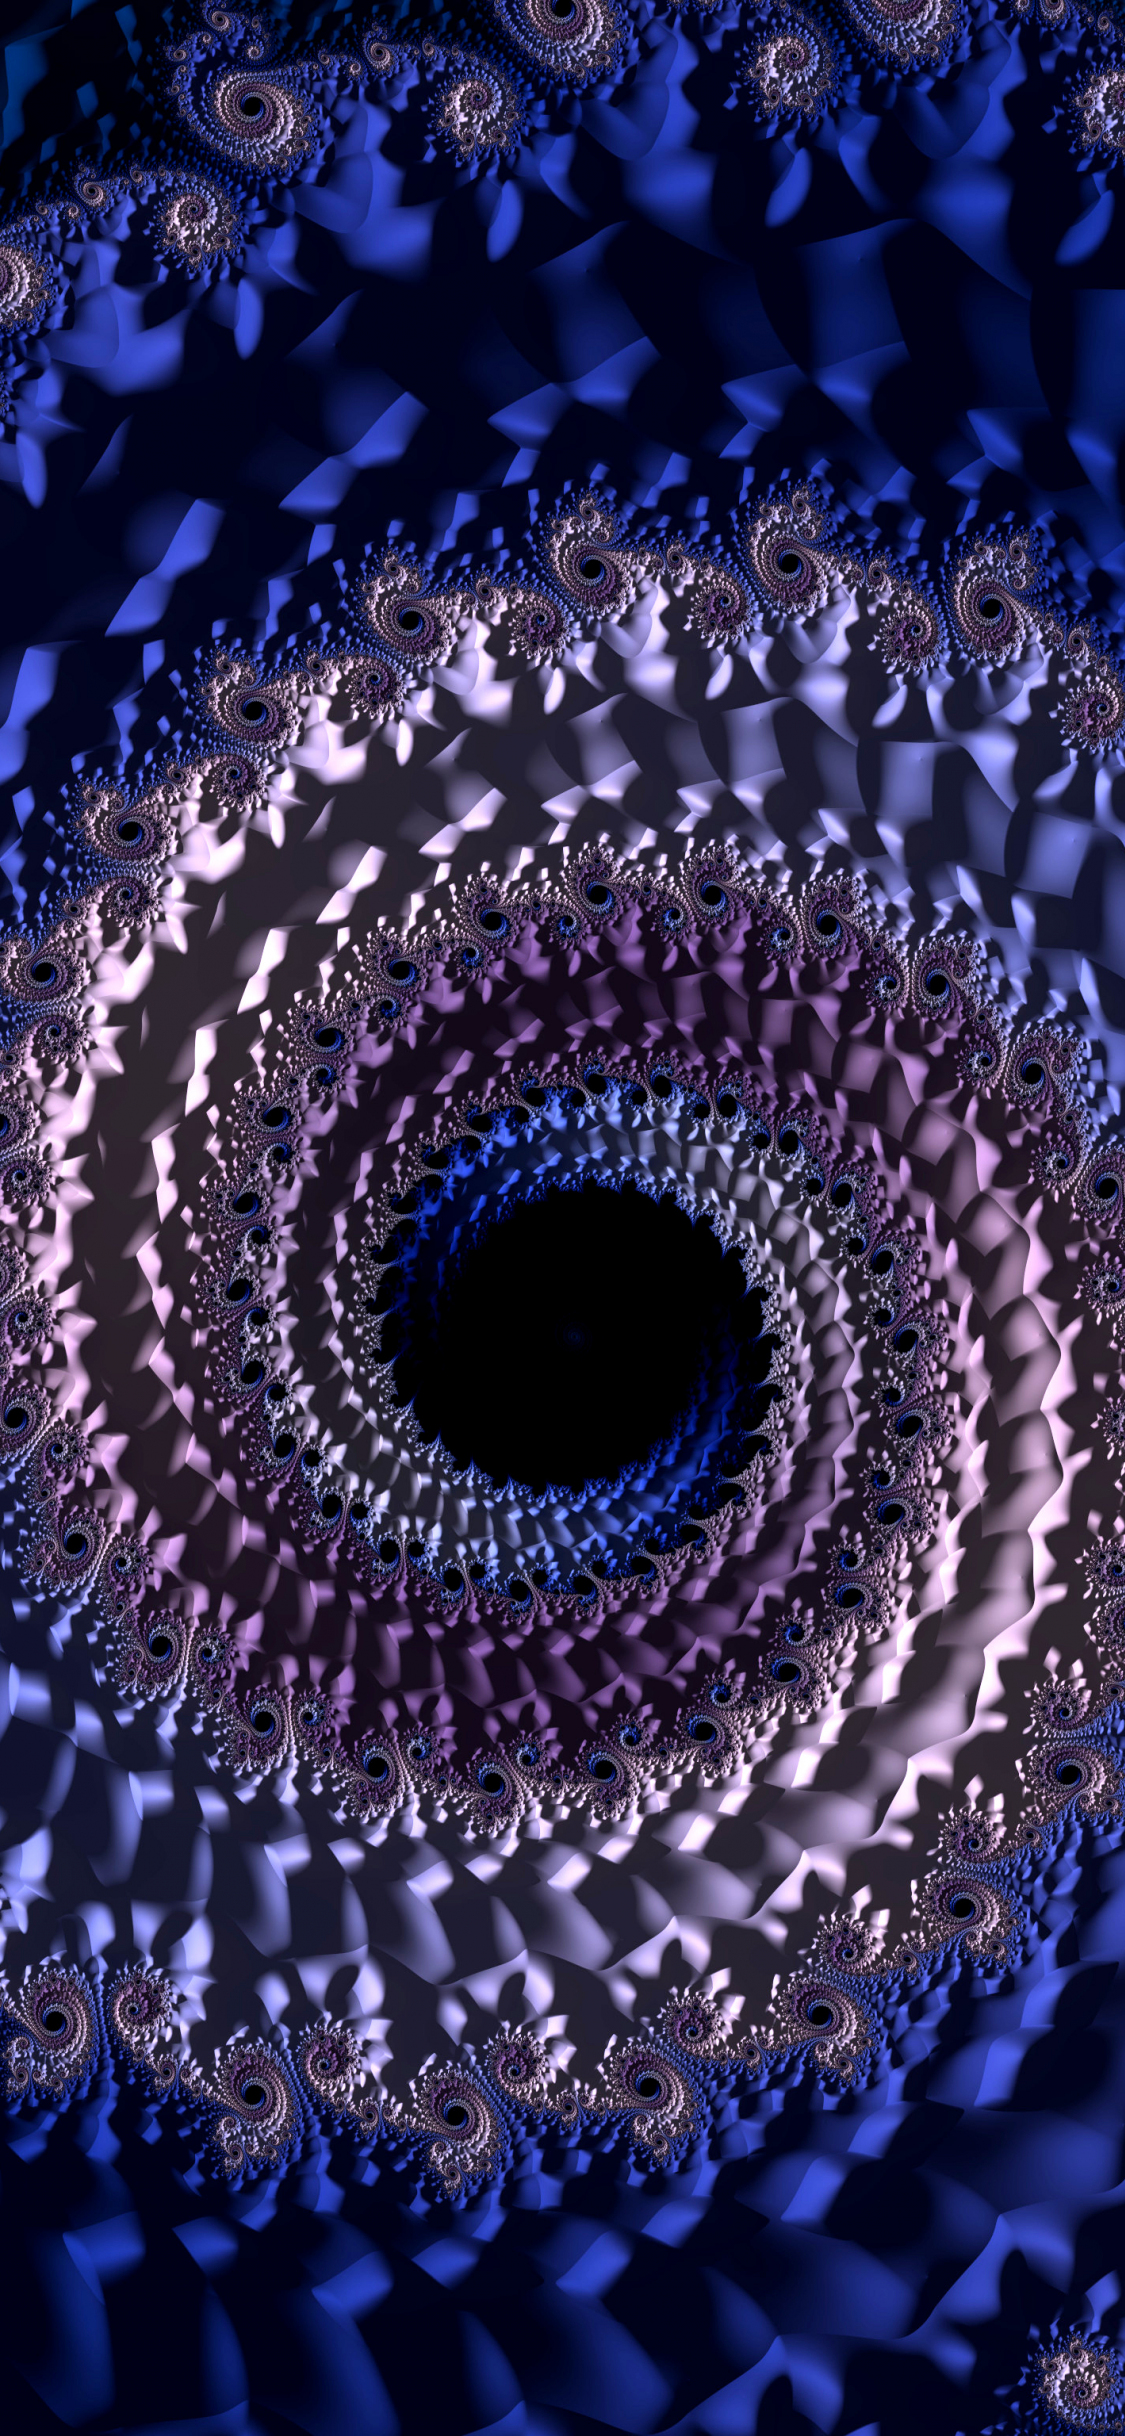 Download wallpaper 1125x2436 blue fractal, vortex, swirling, 3d, iphone x,  1125x2436 hd background, 22579